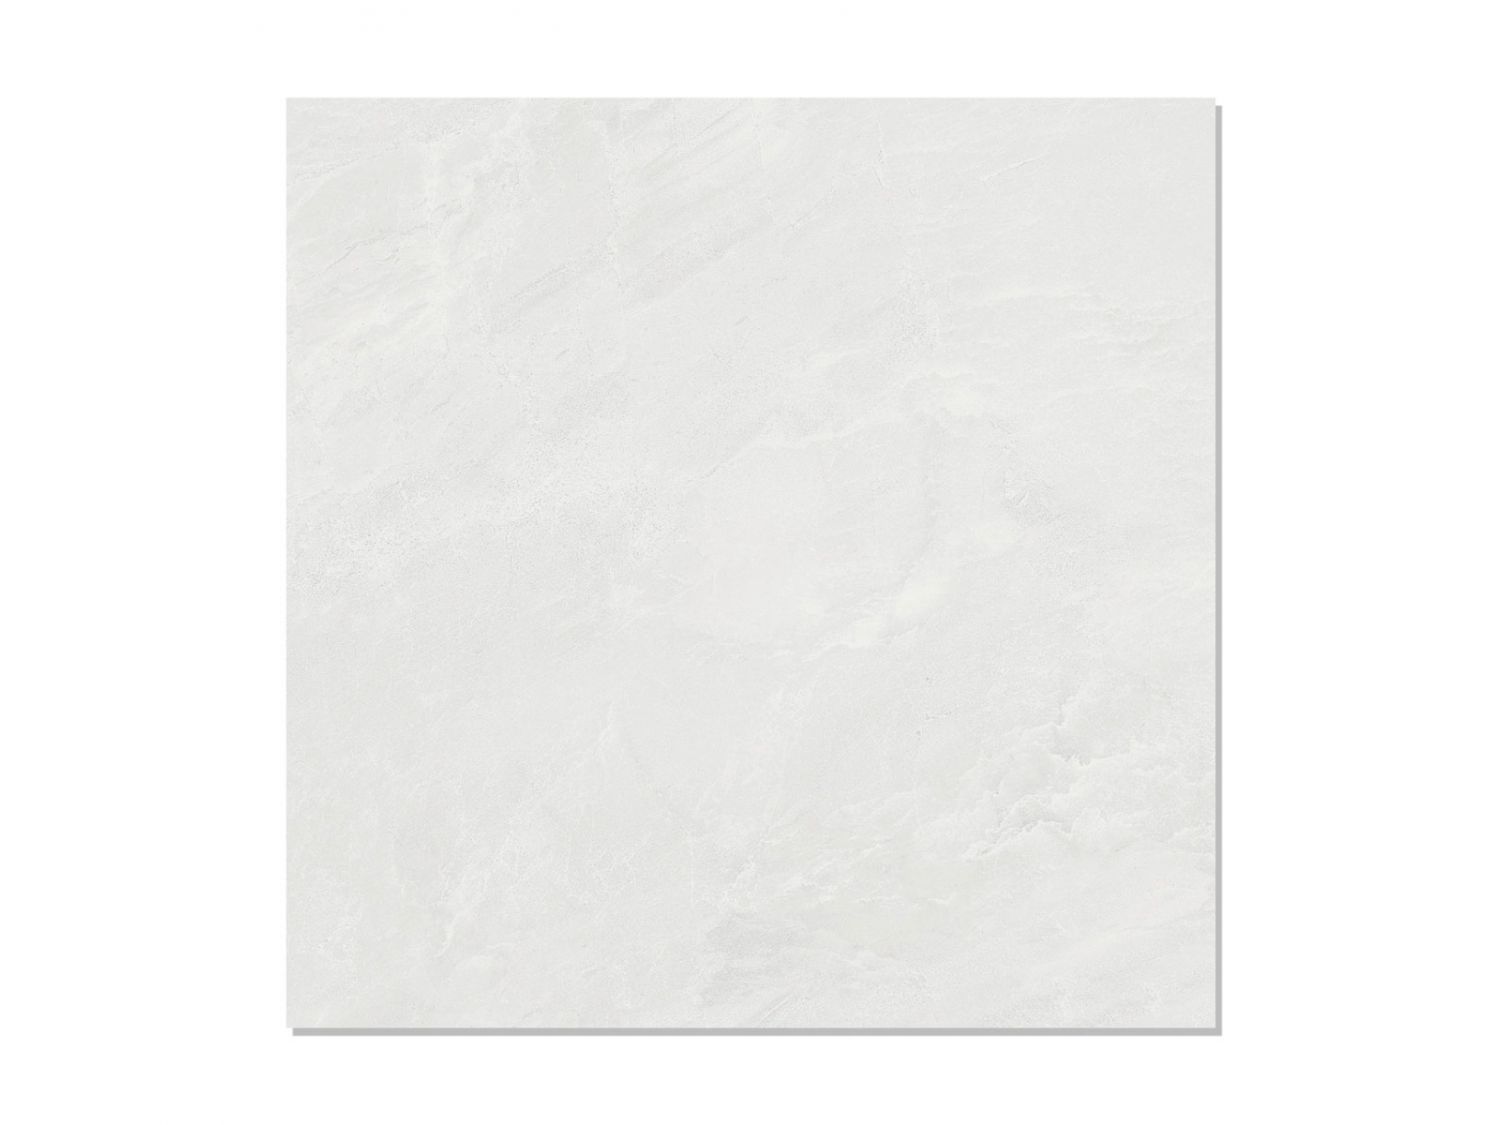 Flores Grey Shiny Ceramic Floor Tile - 430 x 430mm